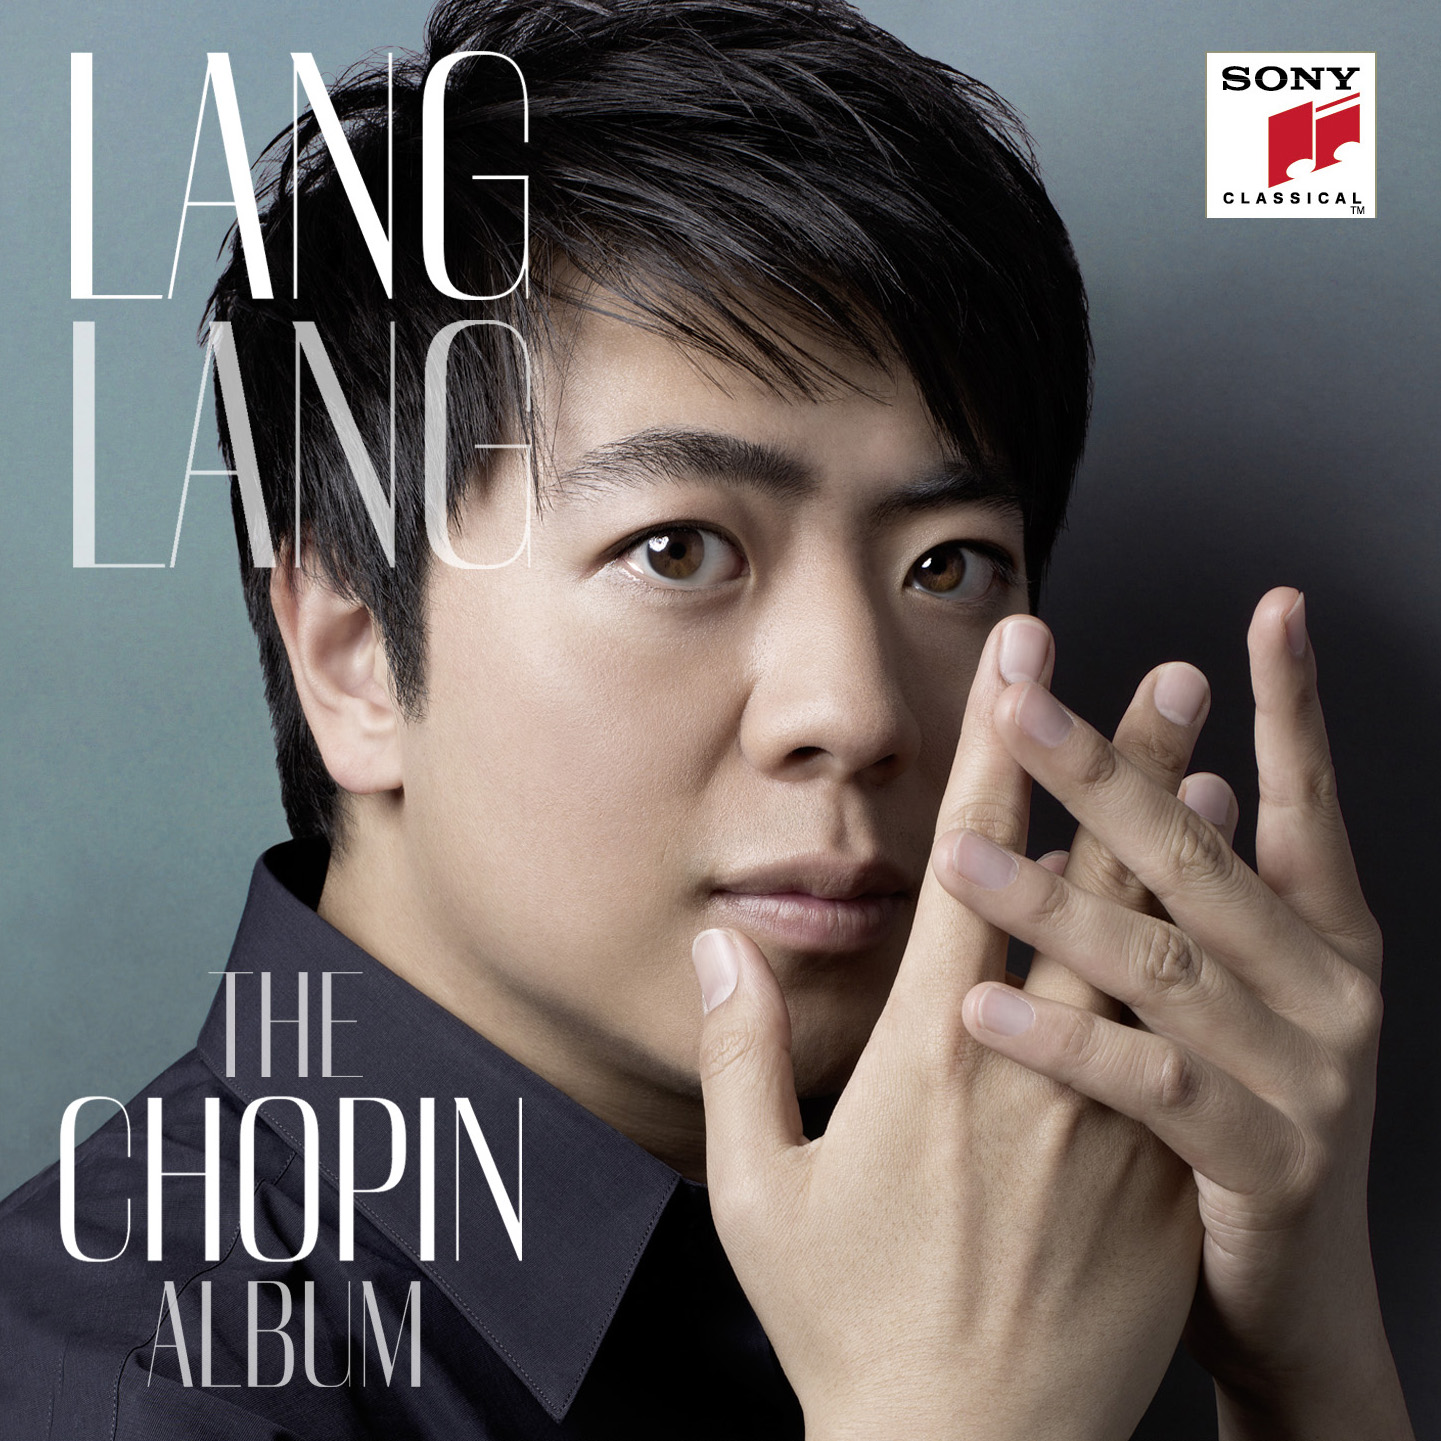 The Chopin Album